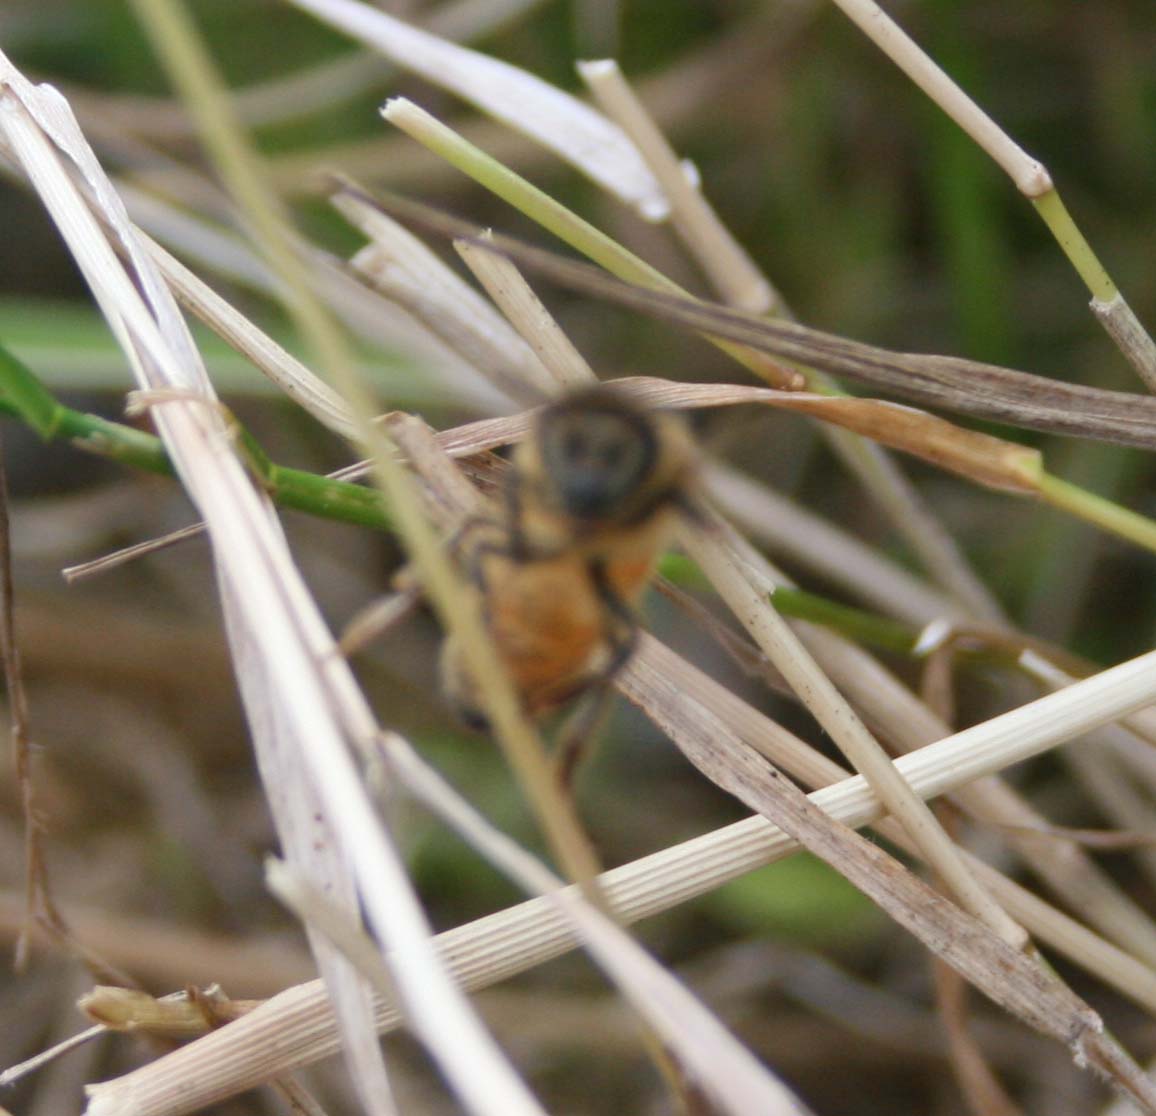 wasps-attacking-bees 080a.jpg